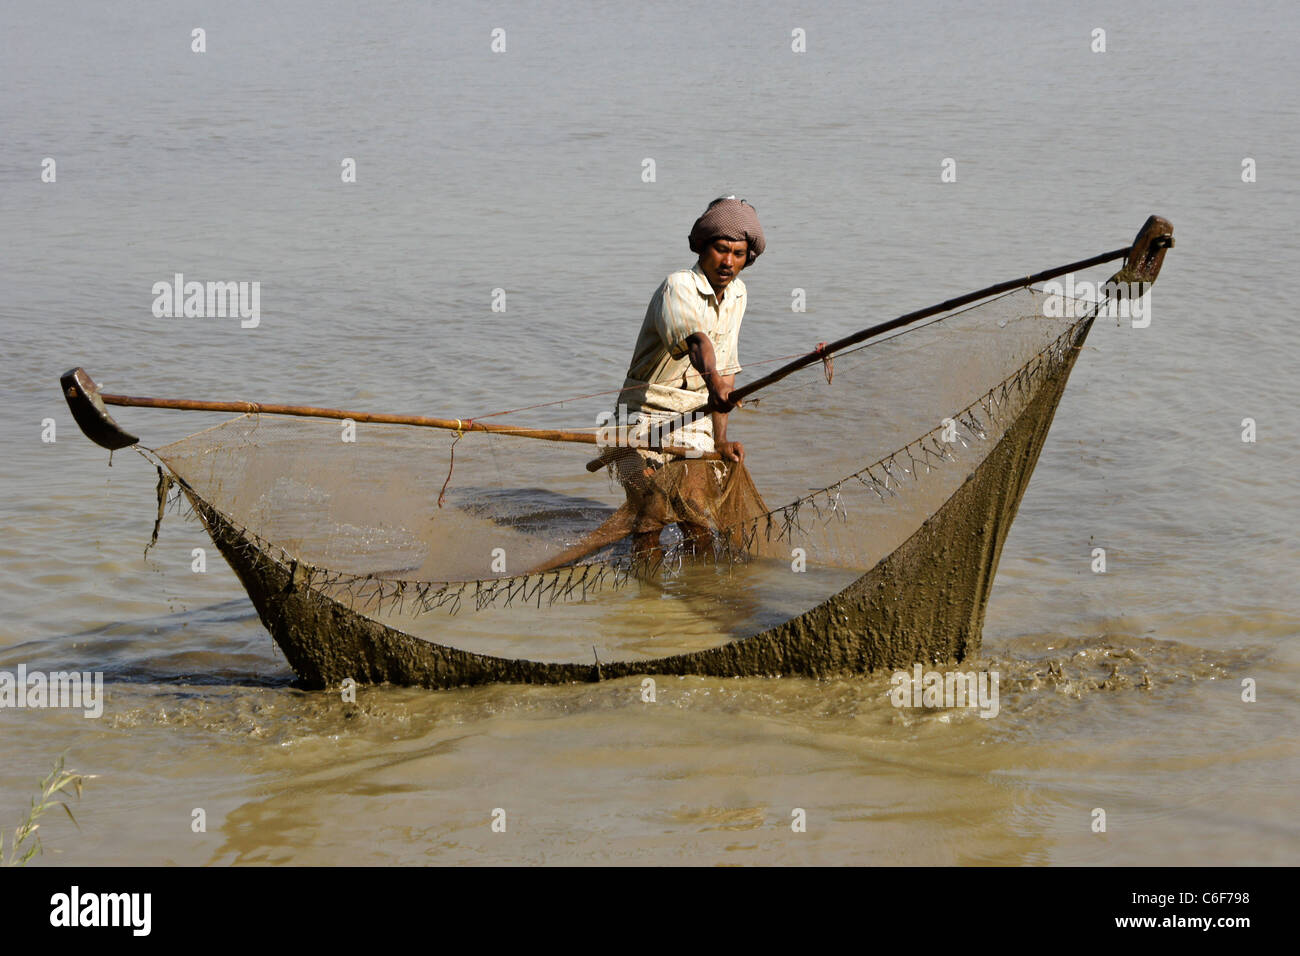 Man fishing with large net and poles, Mandalay, Myanmar (Burma